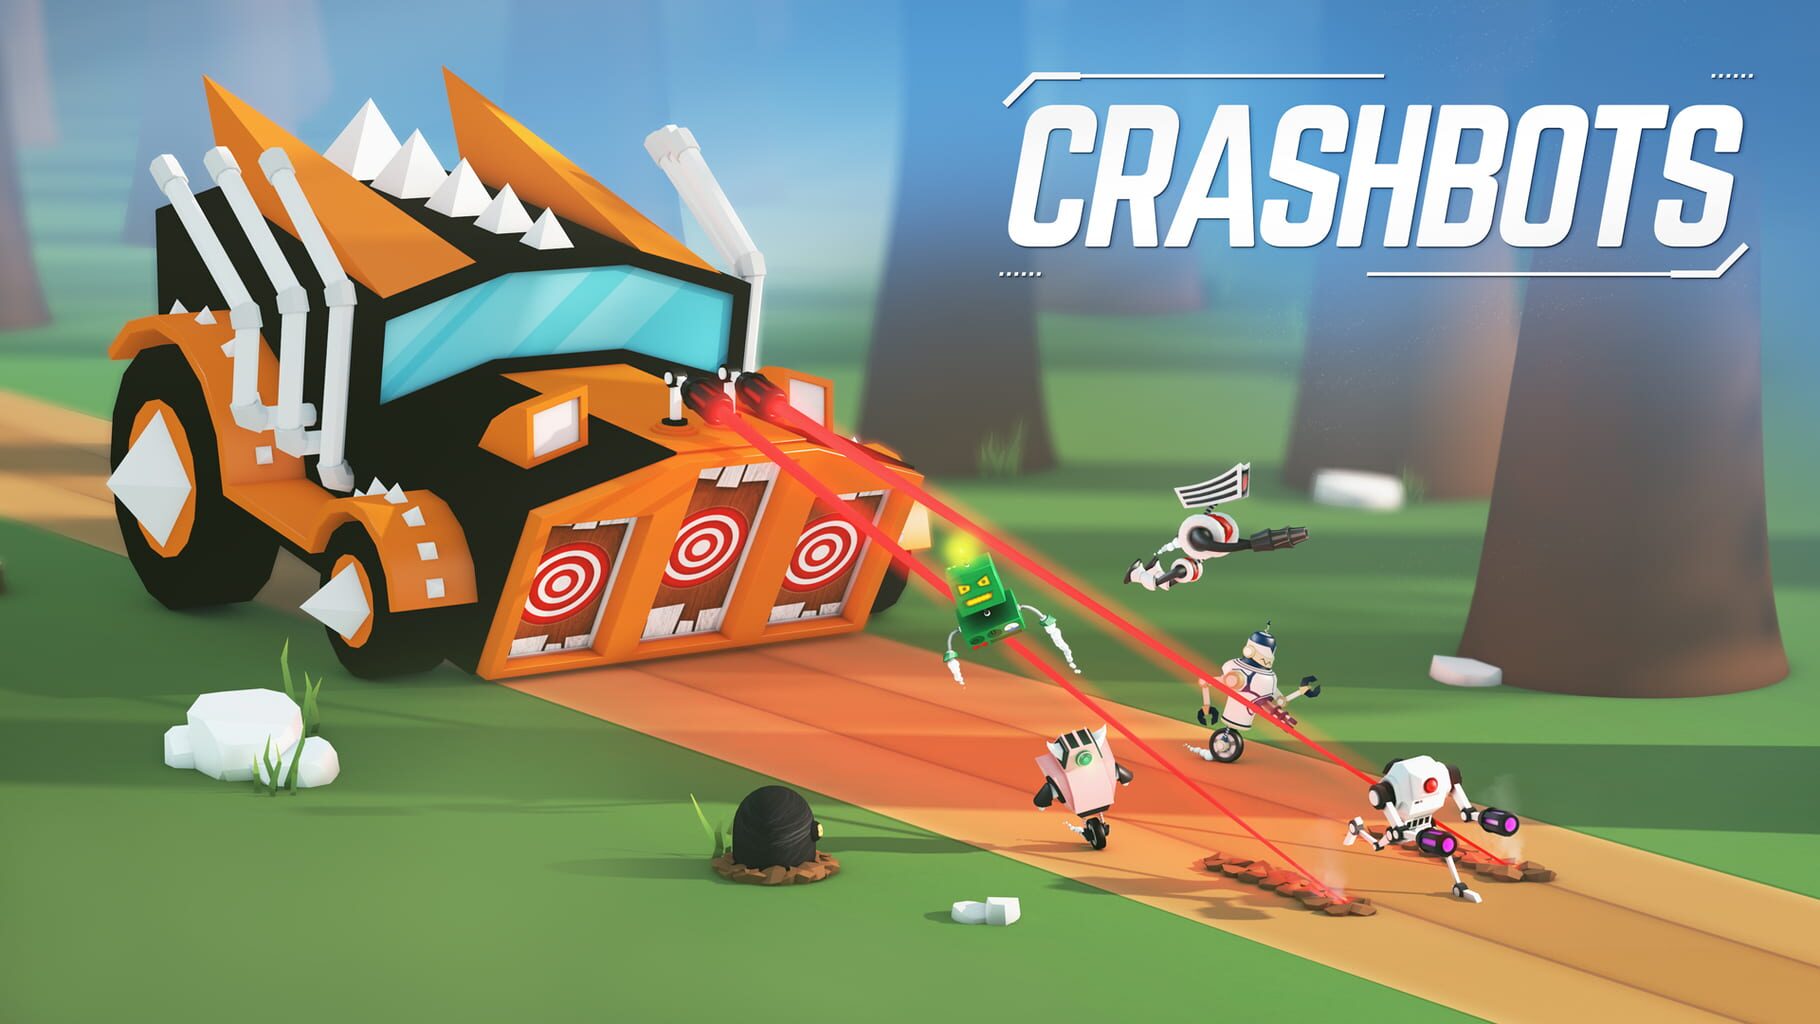 Crashbots artwork